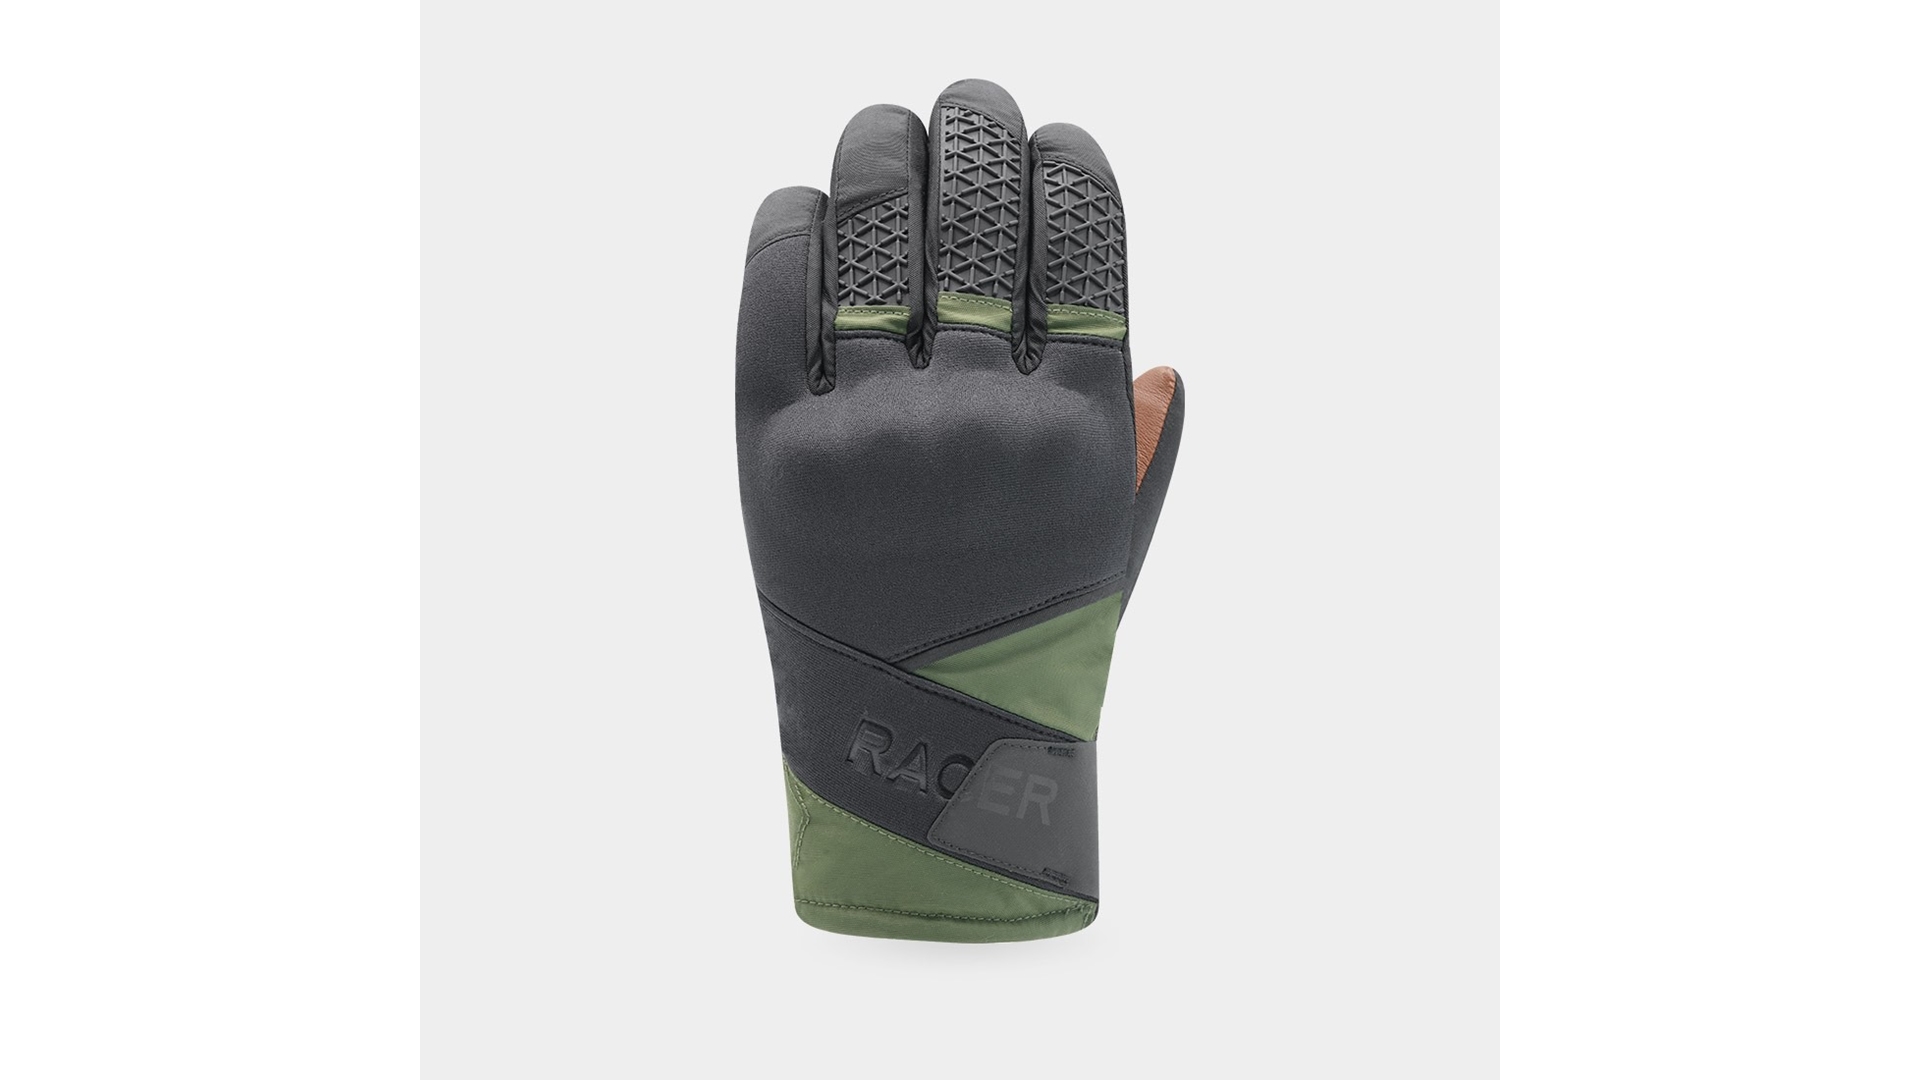 RACER TROOP 4 rukavice černá/khaki černá/khaki XL